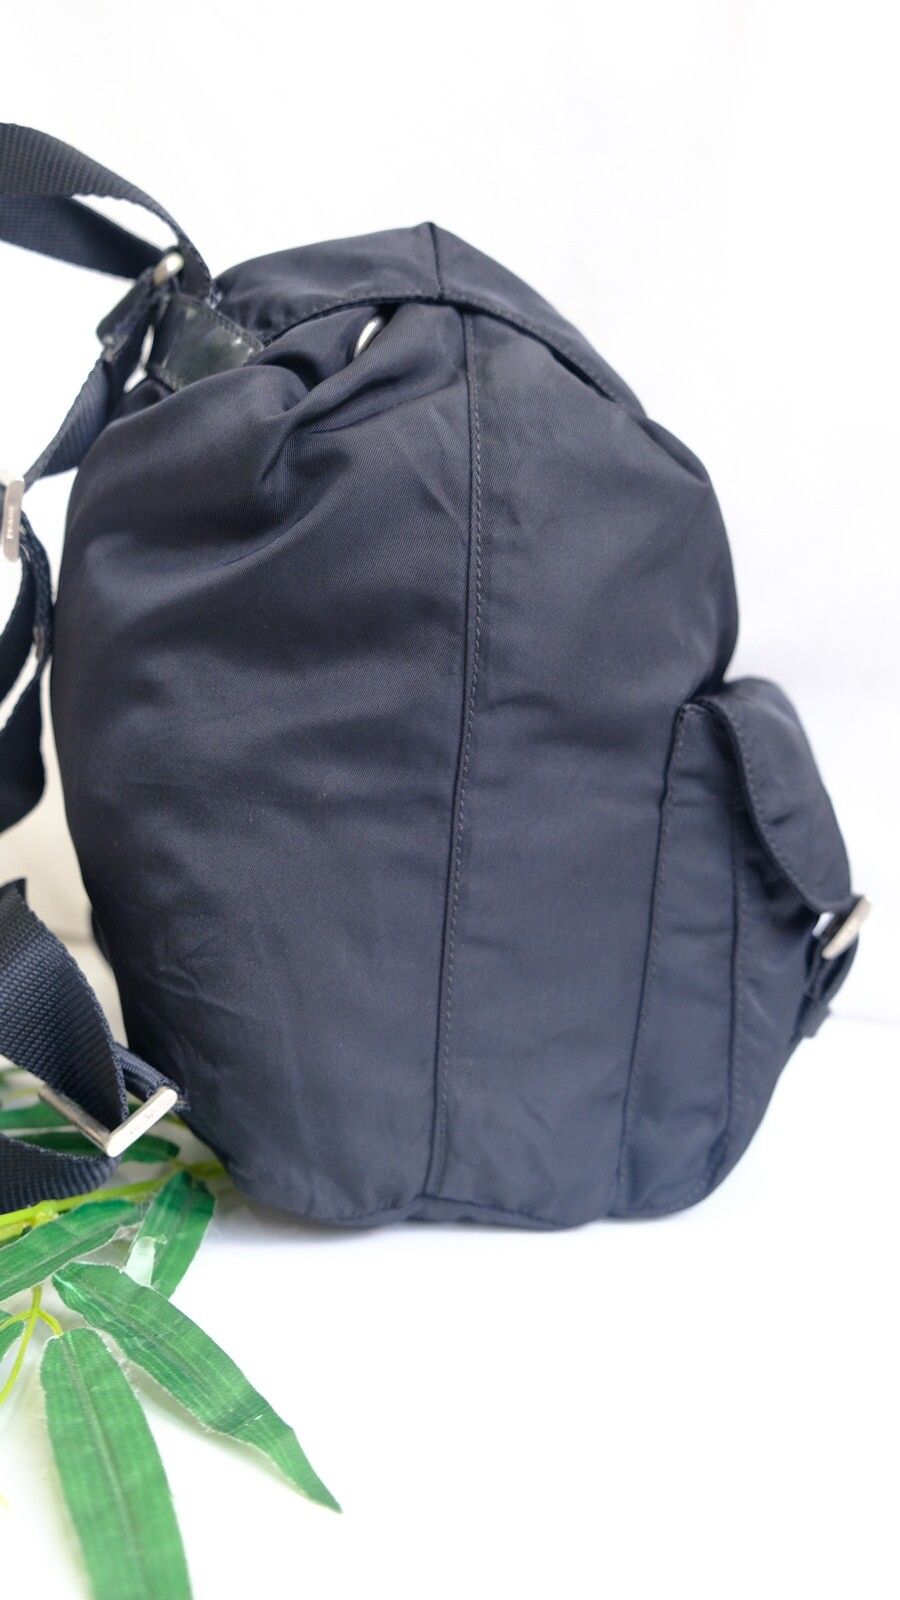 Authentic prada backpack black nylone double pocket - 4